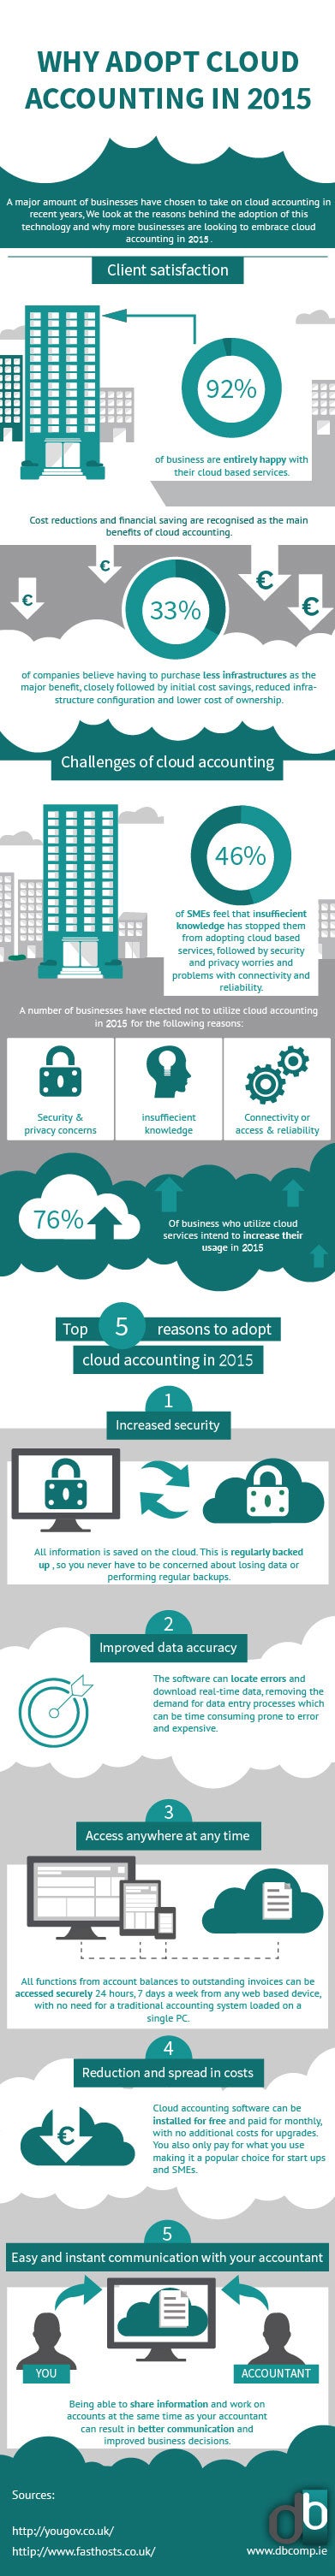 Why Adopt Cloud Computing